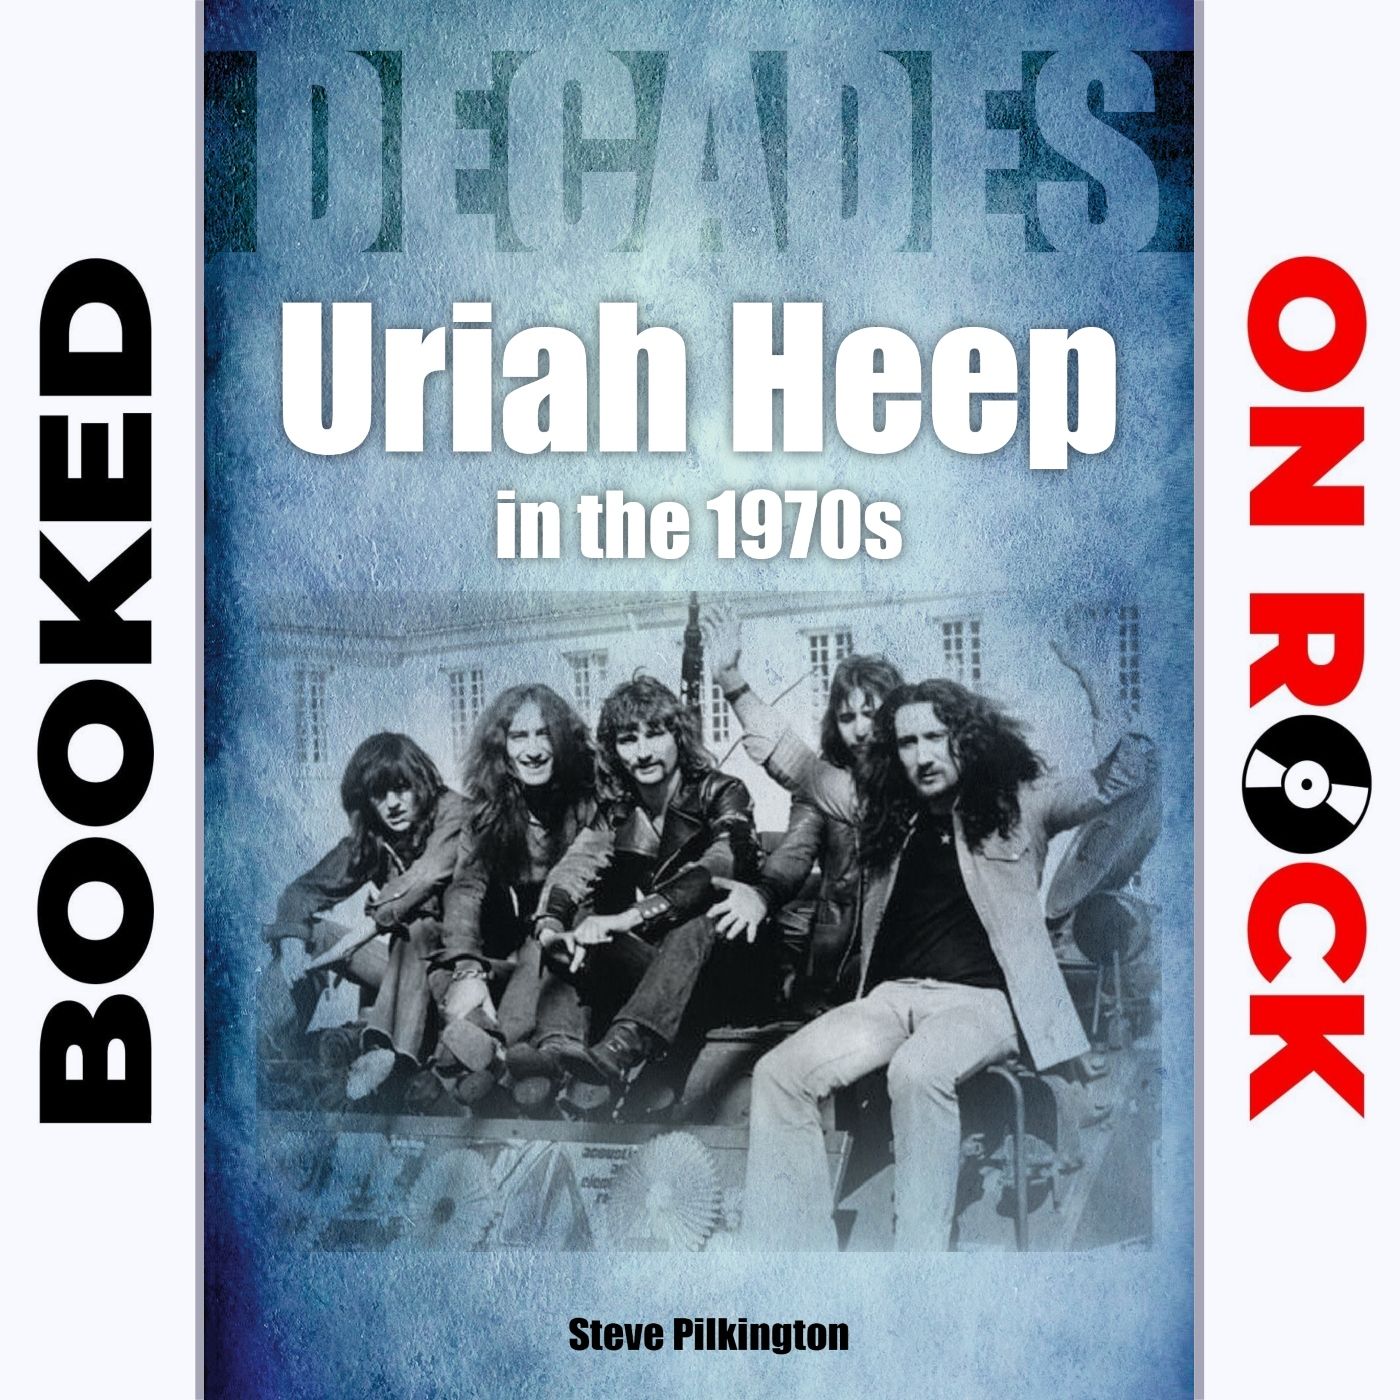 ”Uriah Heep in the 1970s”/Steve Pilkington [Episode 56]